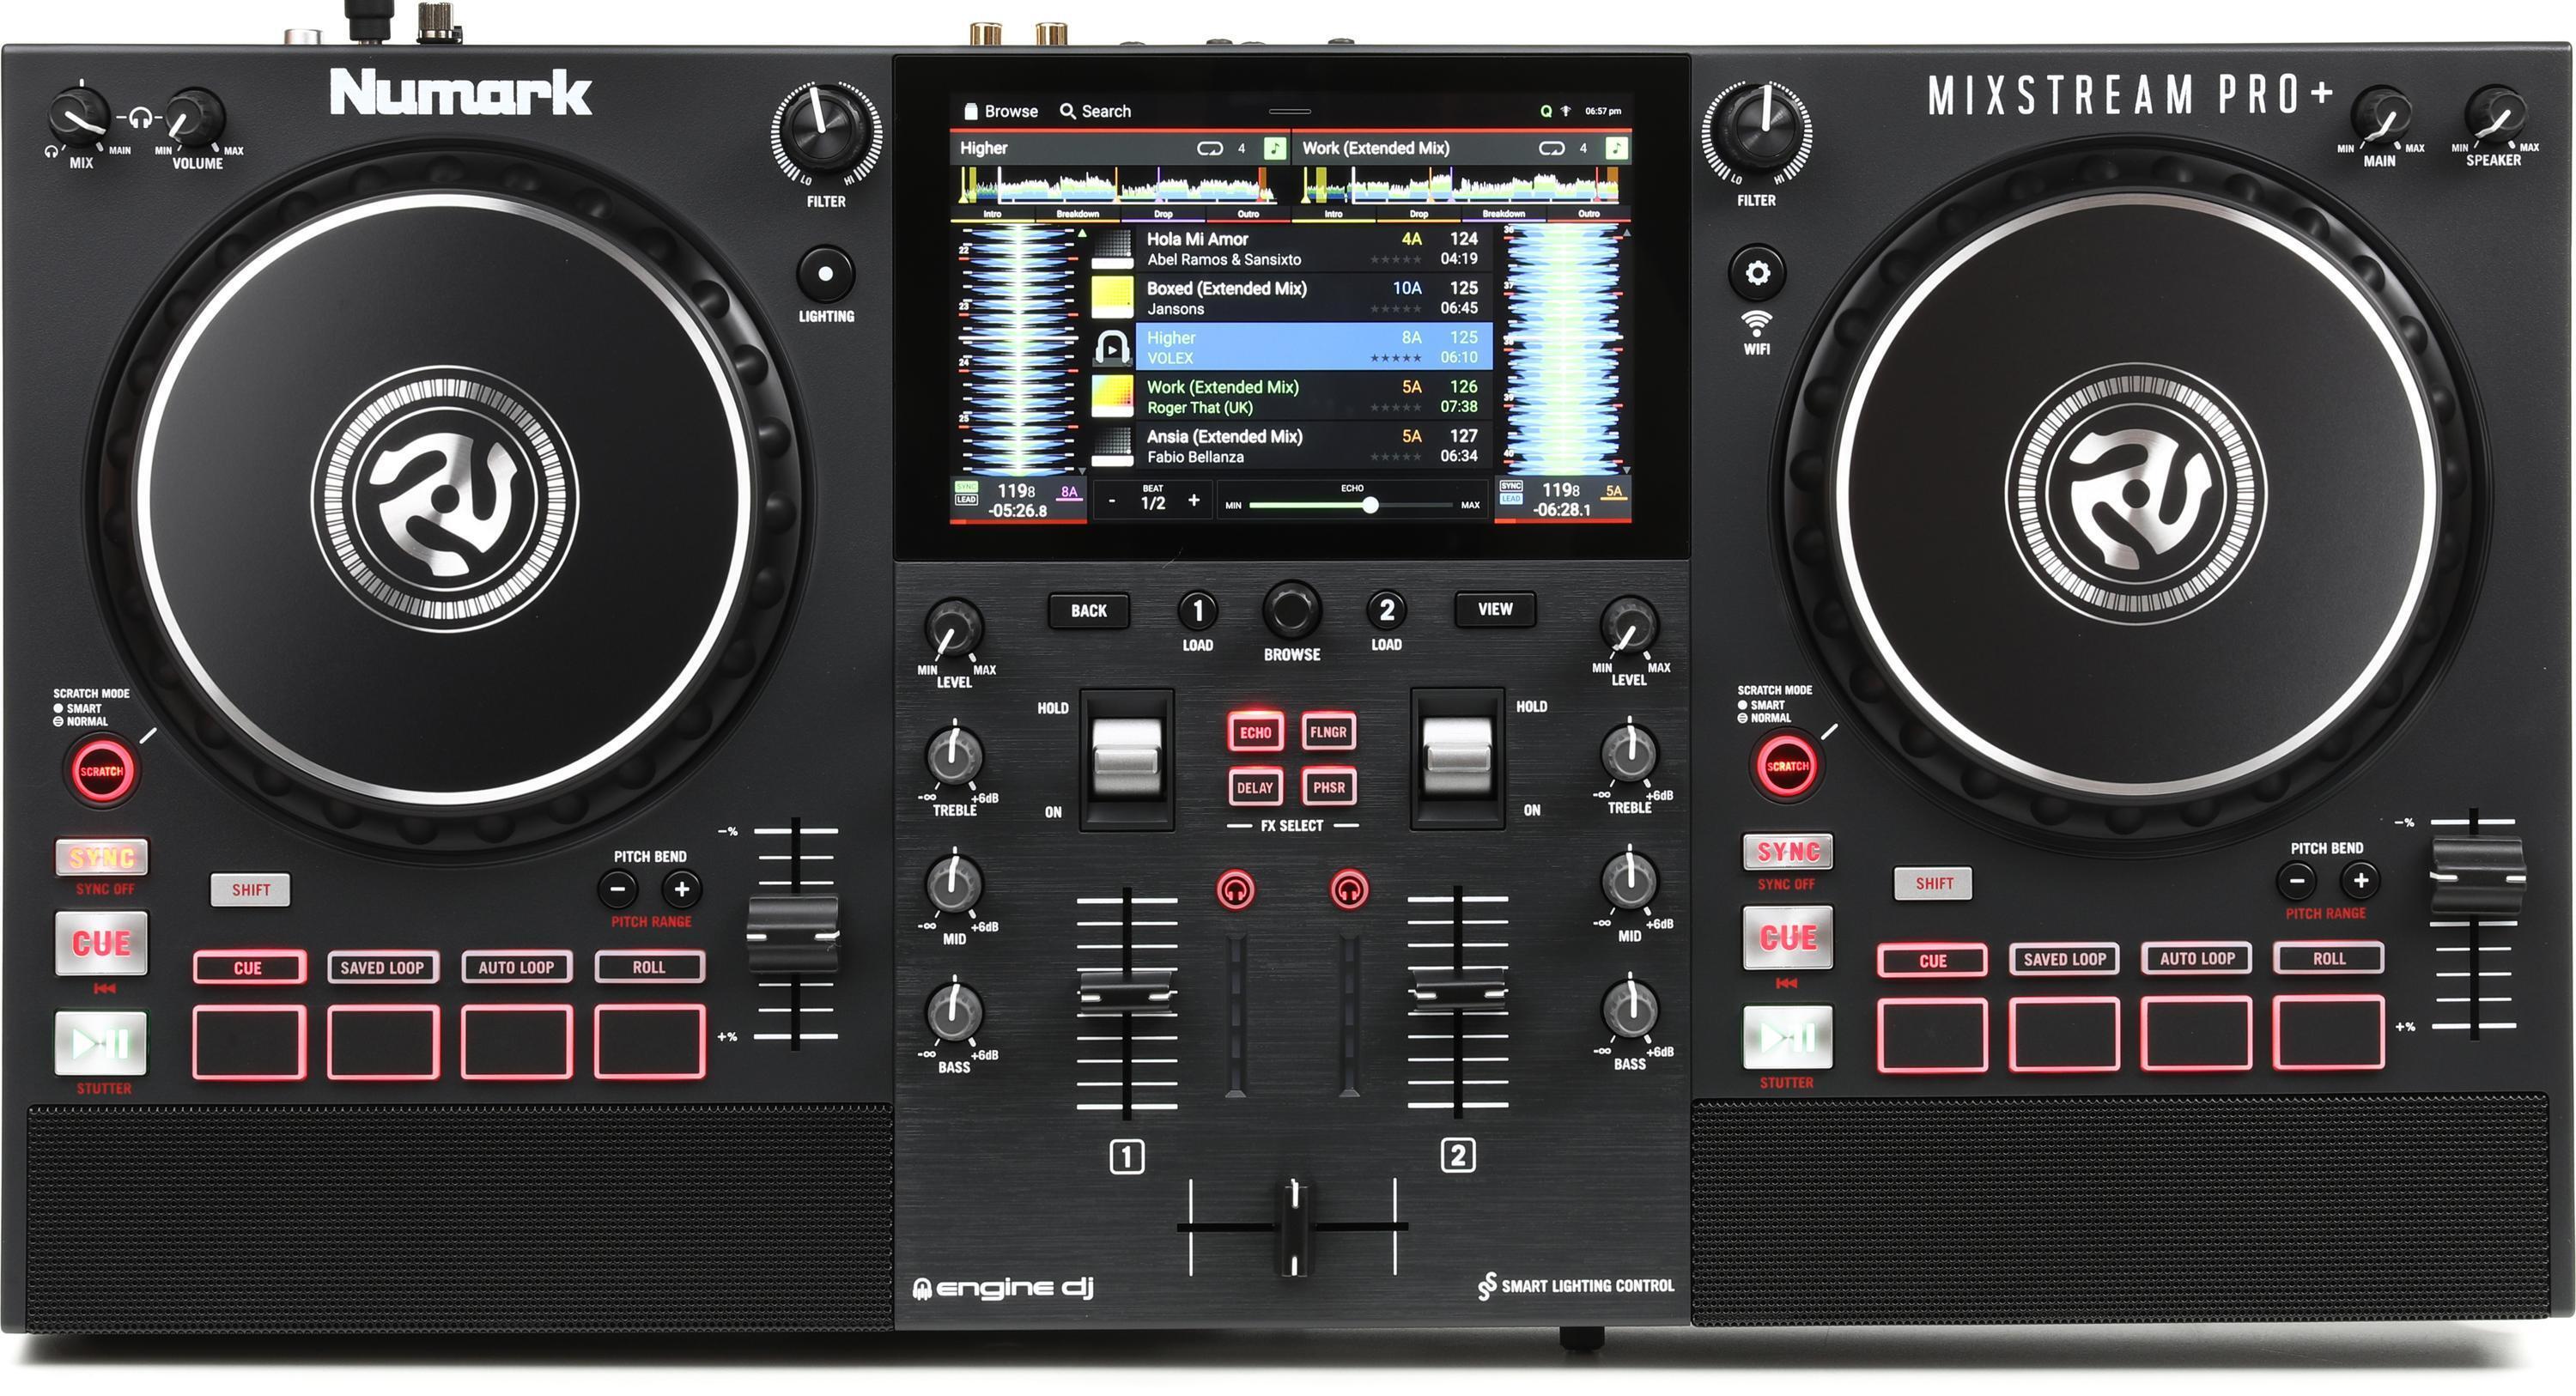 Bundled Item: Numark Mixstream Pro + 2-deck Standalone DJ Controller